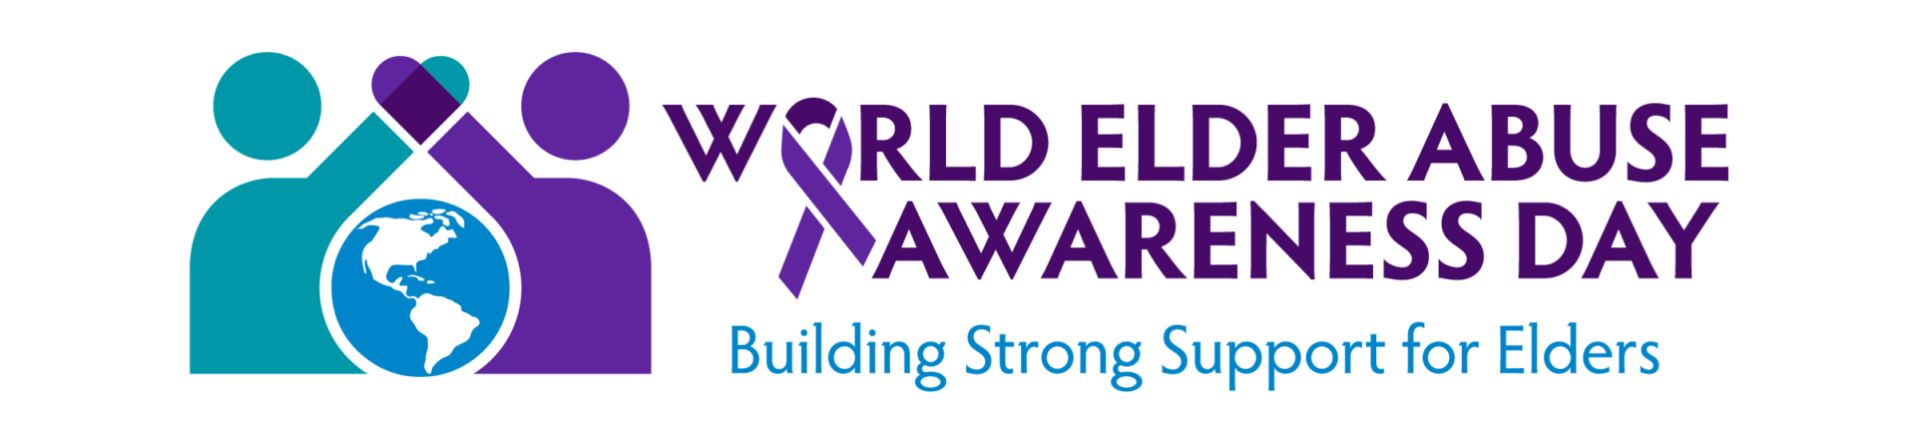 World Elder Abuse Awareness Day. Building Strong Support for Elders.